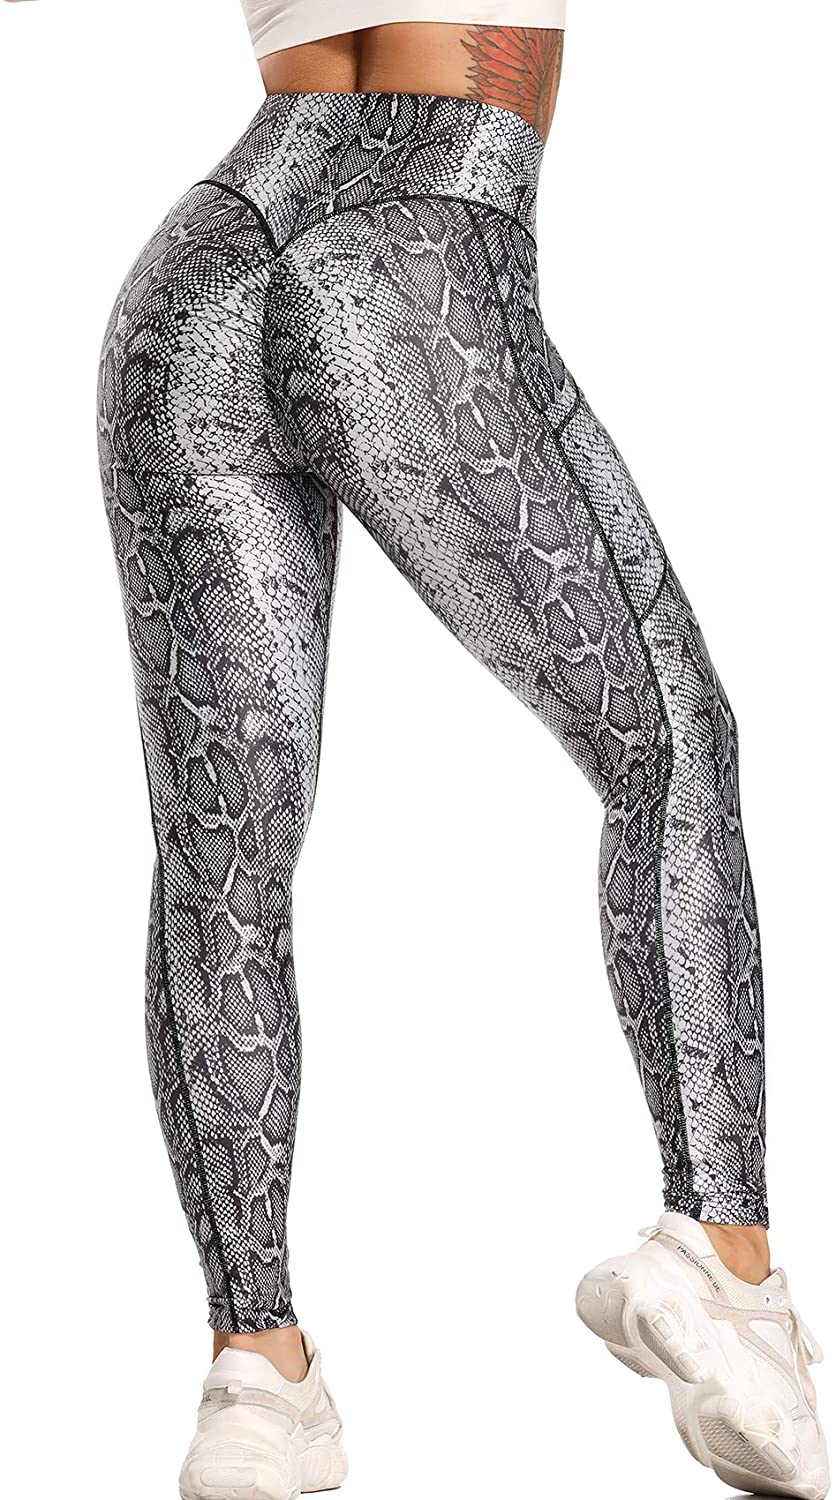 leggings size small Women Scrunch Bum Leopard Print Yoga Pants High Rise